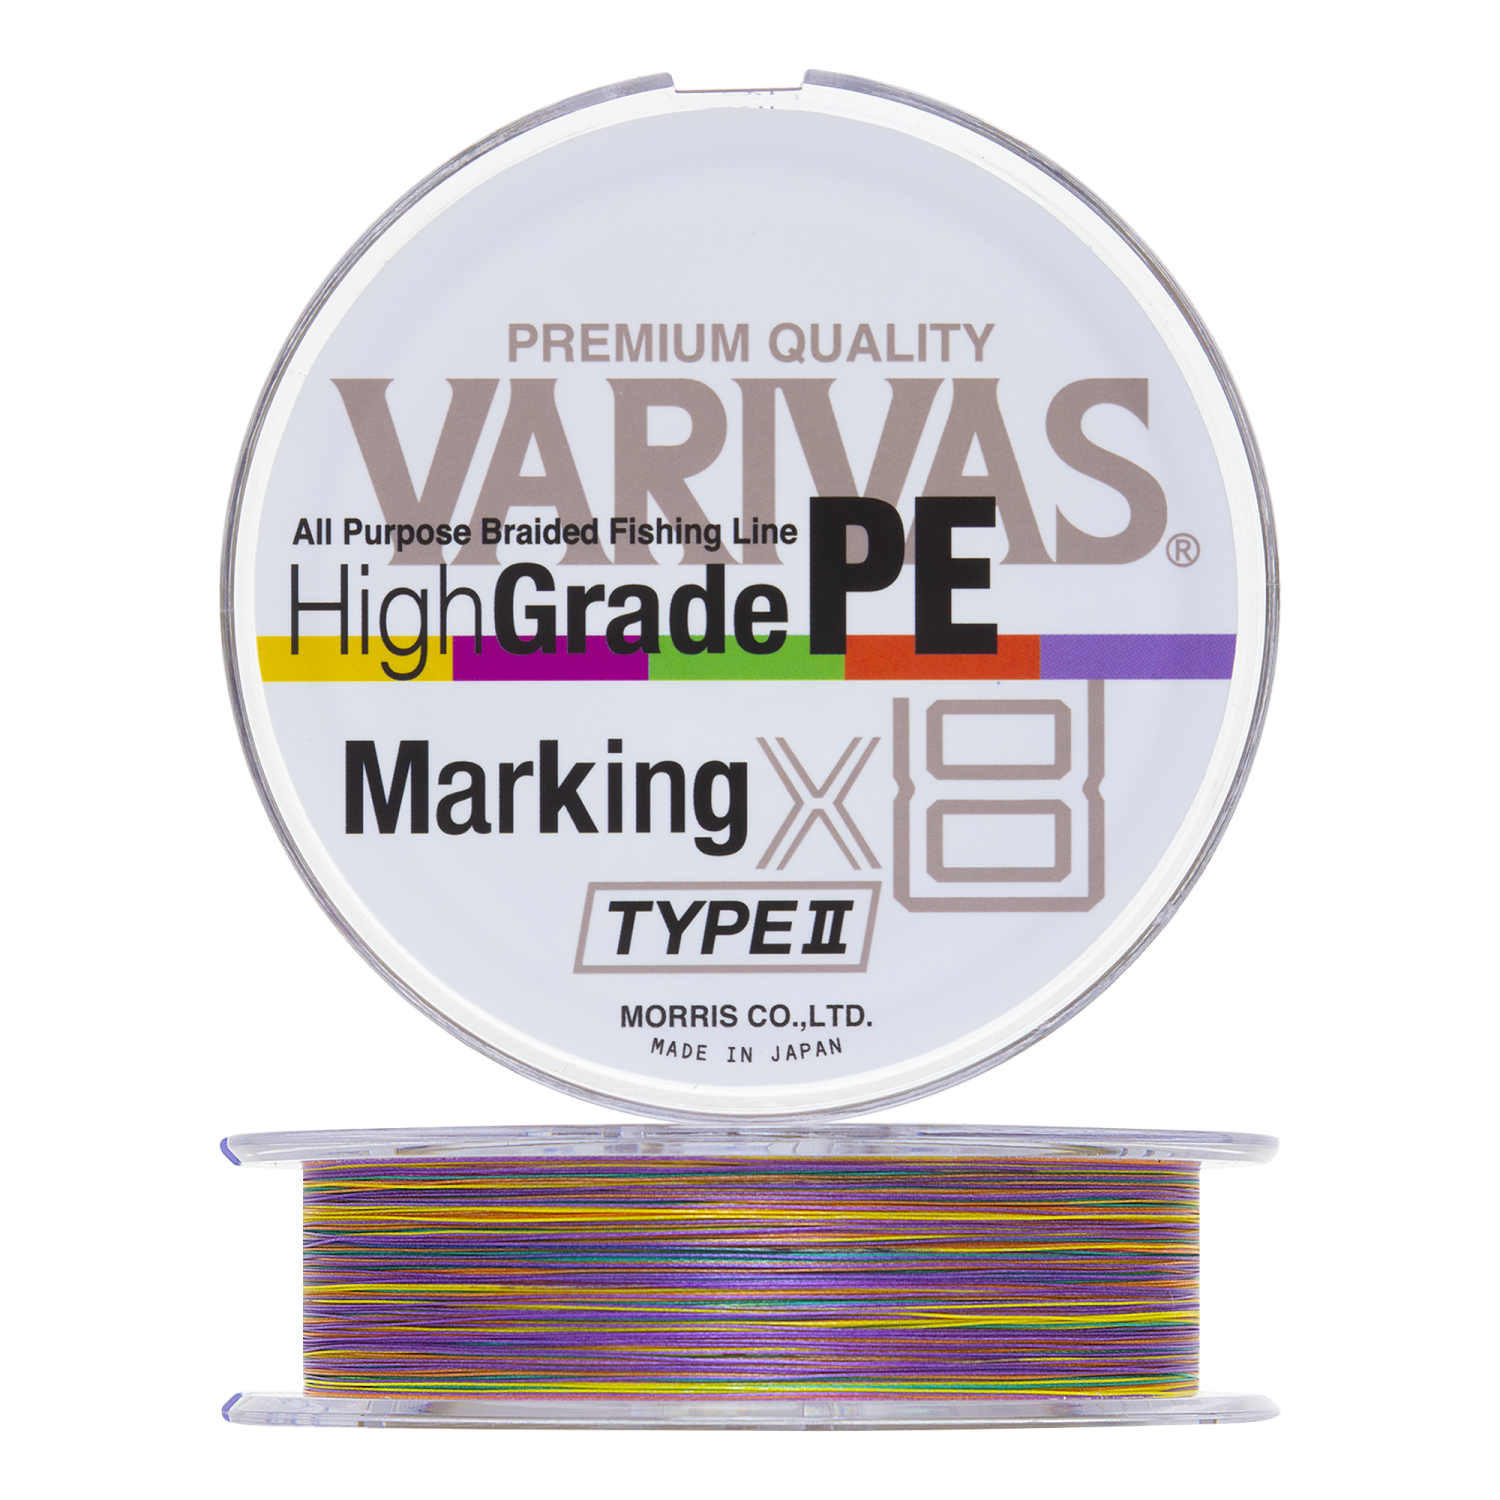 Шнур плетеный Varivas High Grade PE X8 Marking Type II #1,5 0,205мм 150м (multicolor)